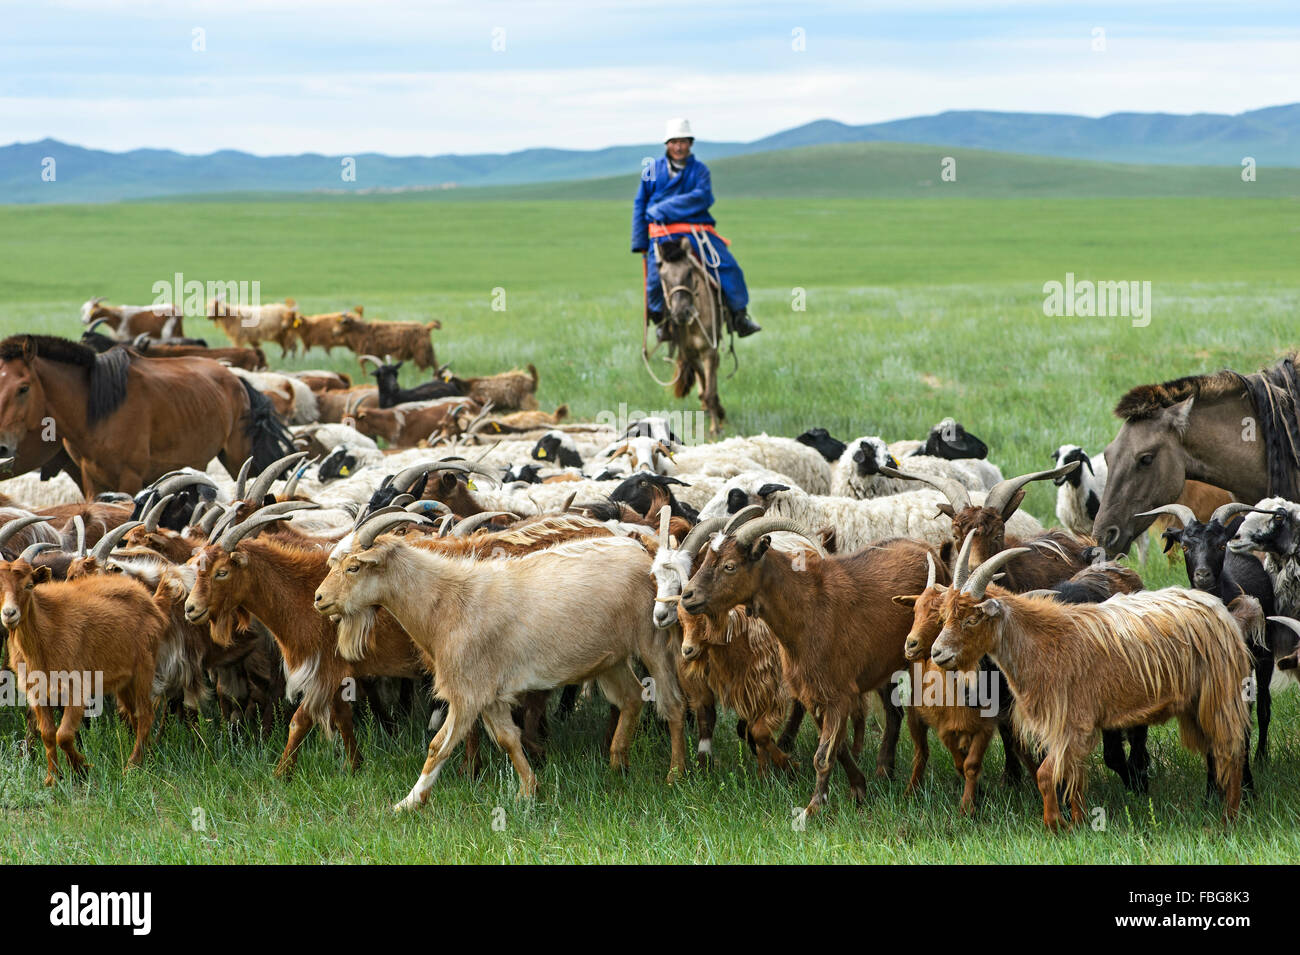 Mongolian nomad on horse, herding cashmere goats (Capra hircus laniger), Dashinchilen, Bulgan Aimag, Mongolia Stock Photo